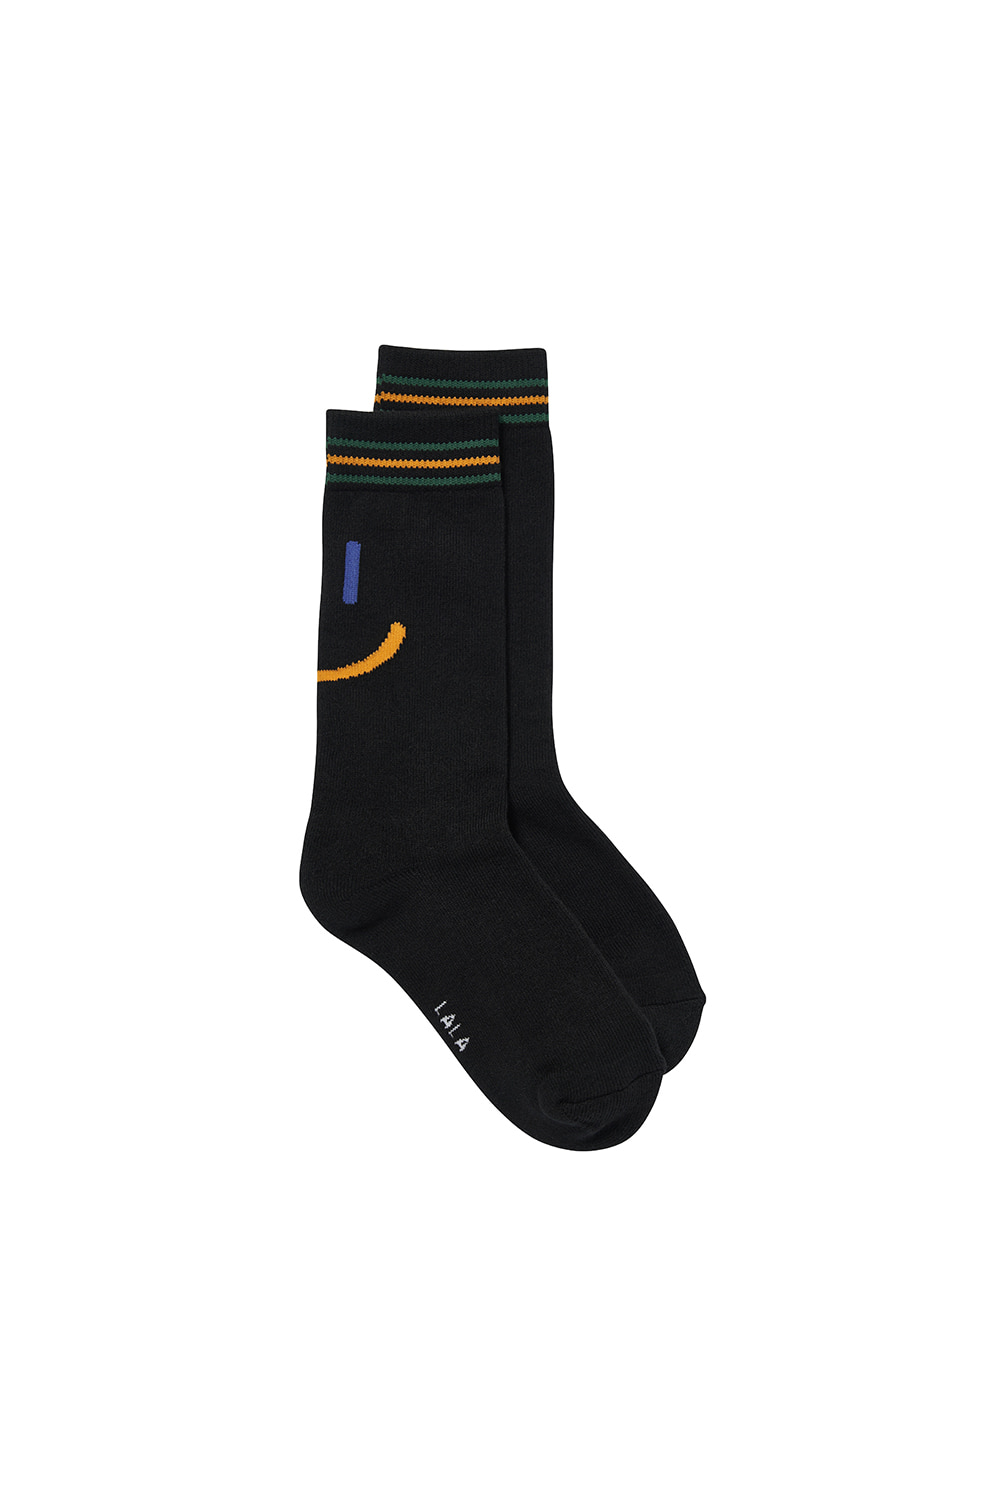 LaLa New Socks [Black]